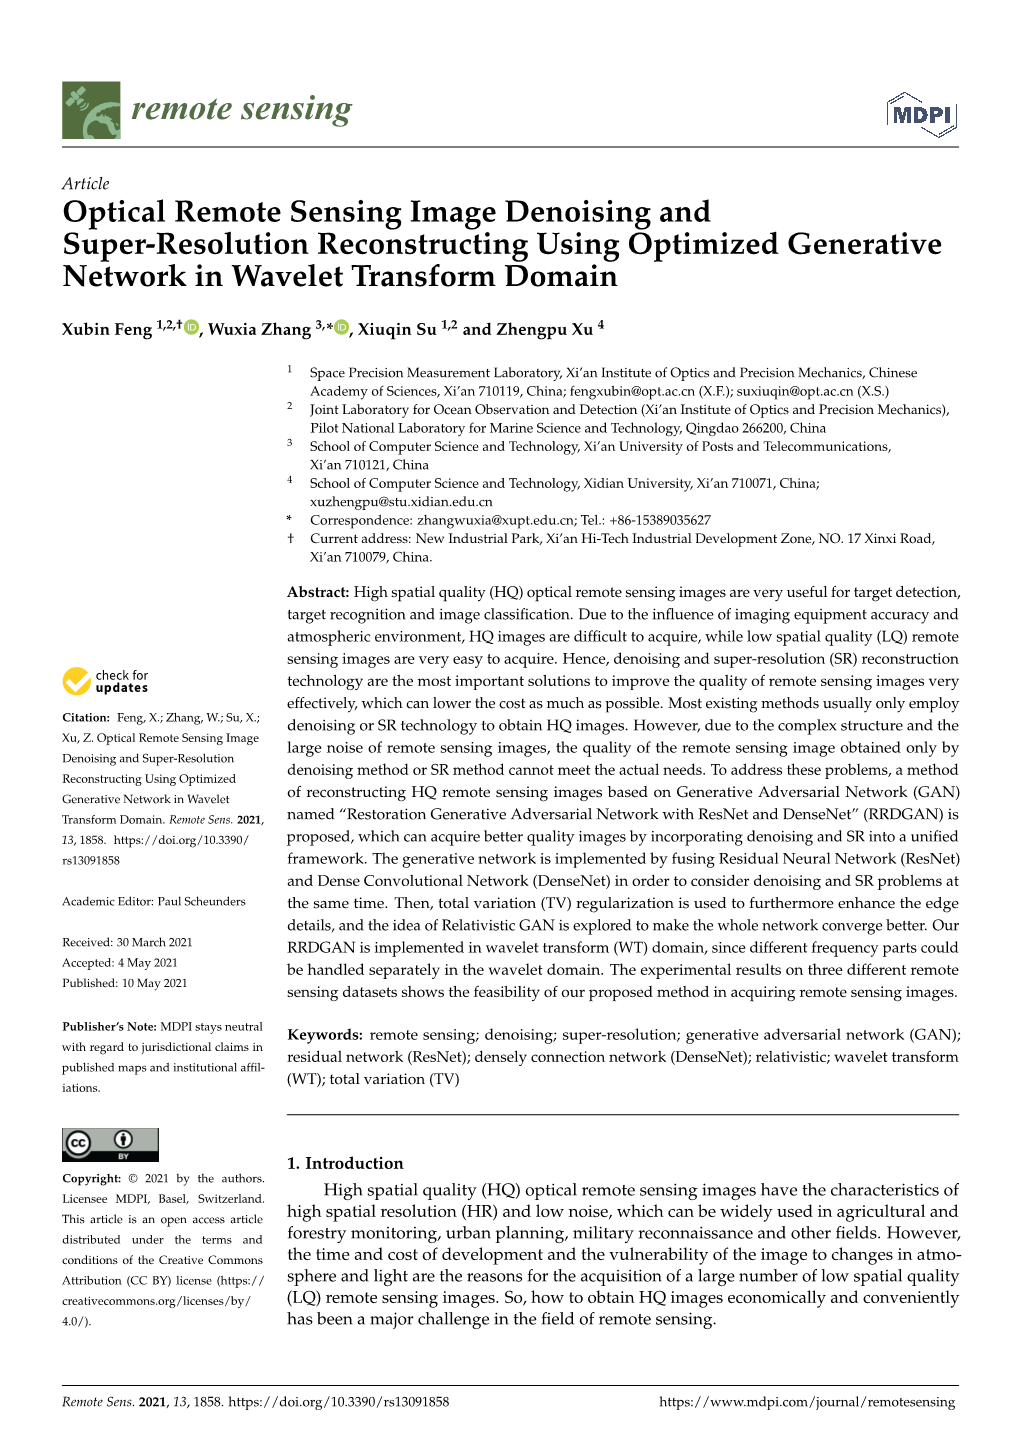 Optical Remote Sensing Image Denoising and Super-Resolution Reconstructing Using Optimized Generative Network in Wavelet Transform Domain